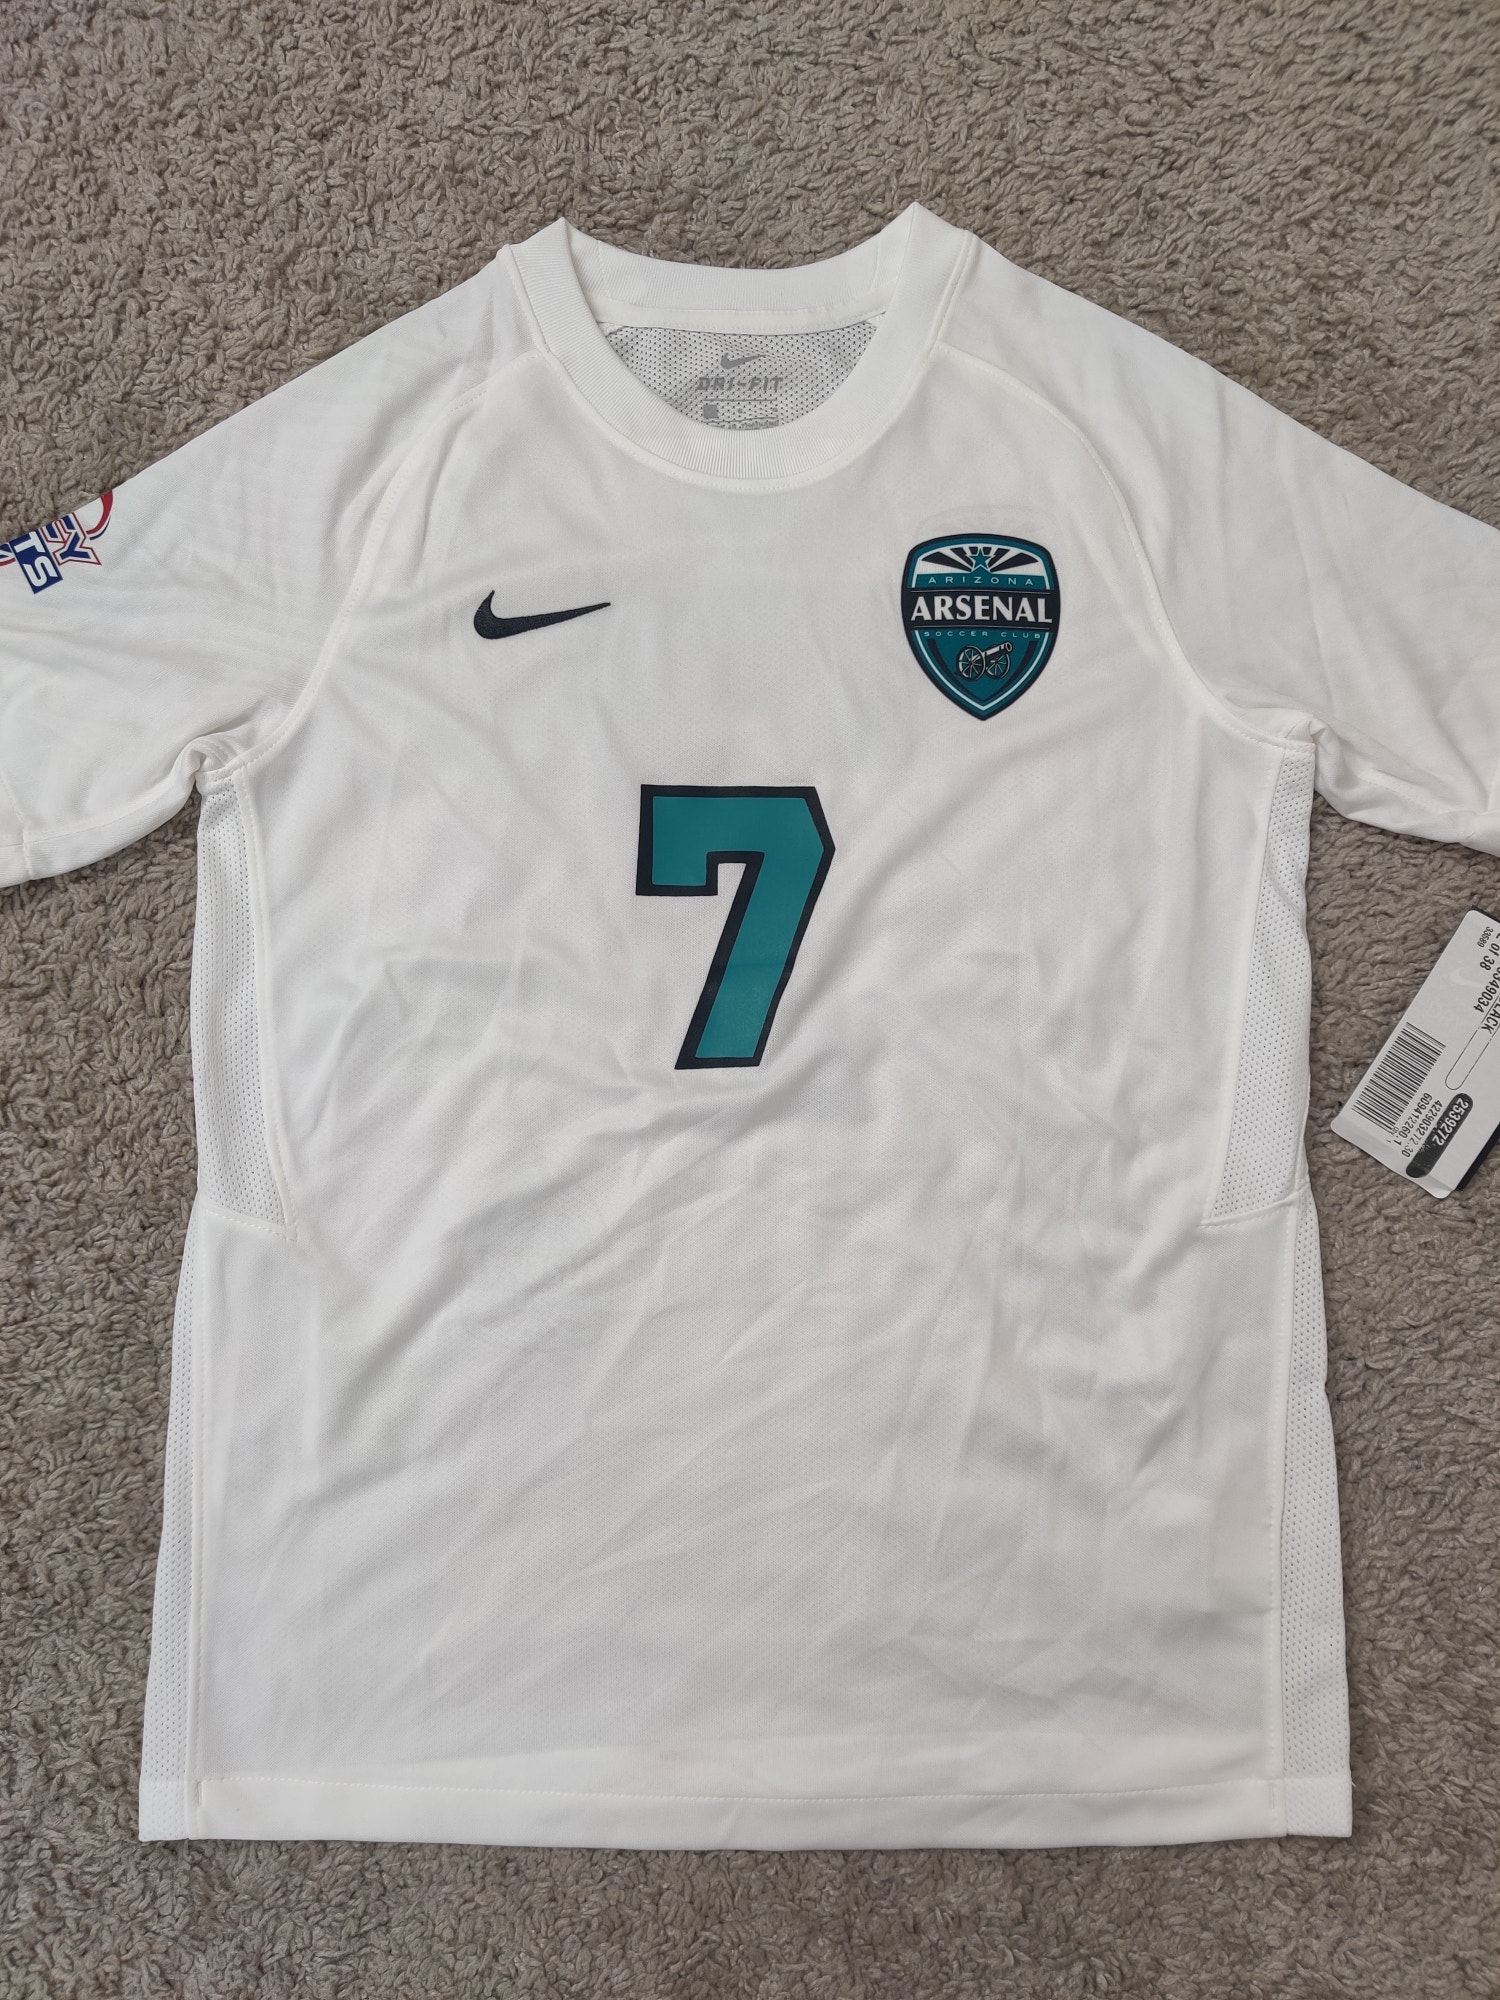 (V) NEW Nike Dri-Fit Youth Arsenal Arizona Soccer Club #7 shirt jersey sz L - Picture 4 of 12